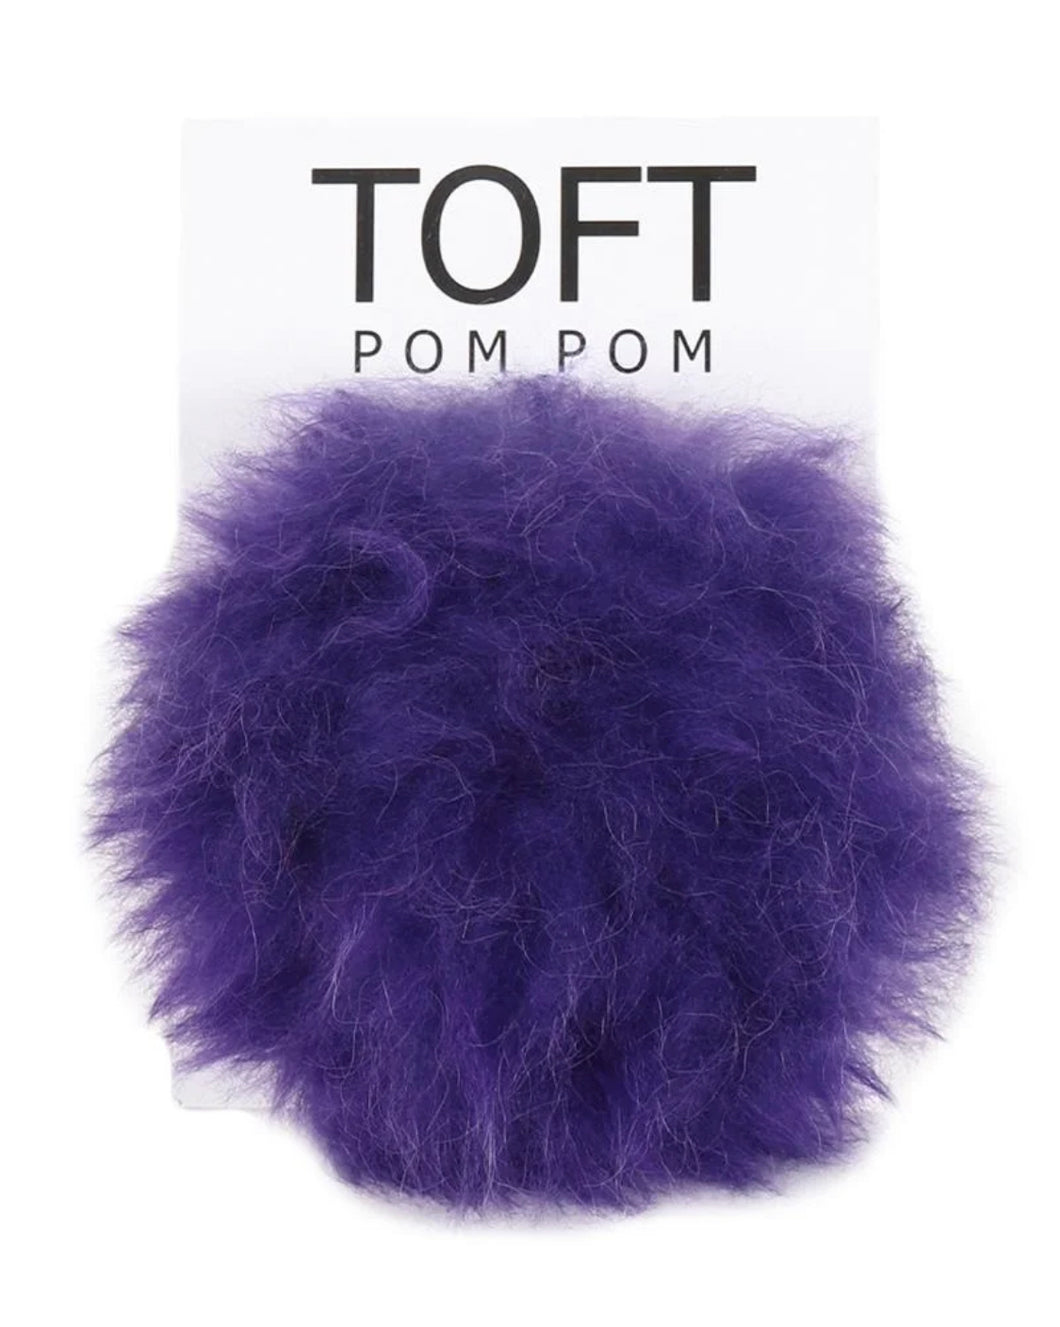 TOFT Alpaca Pom Pom - Brights (New)